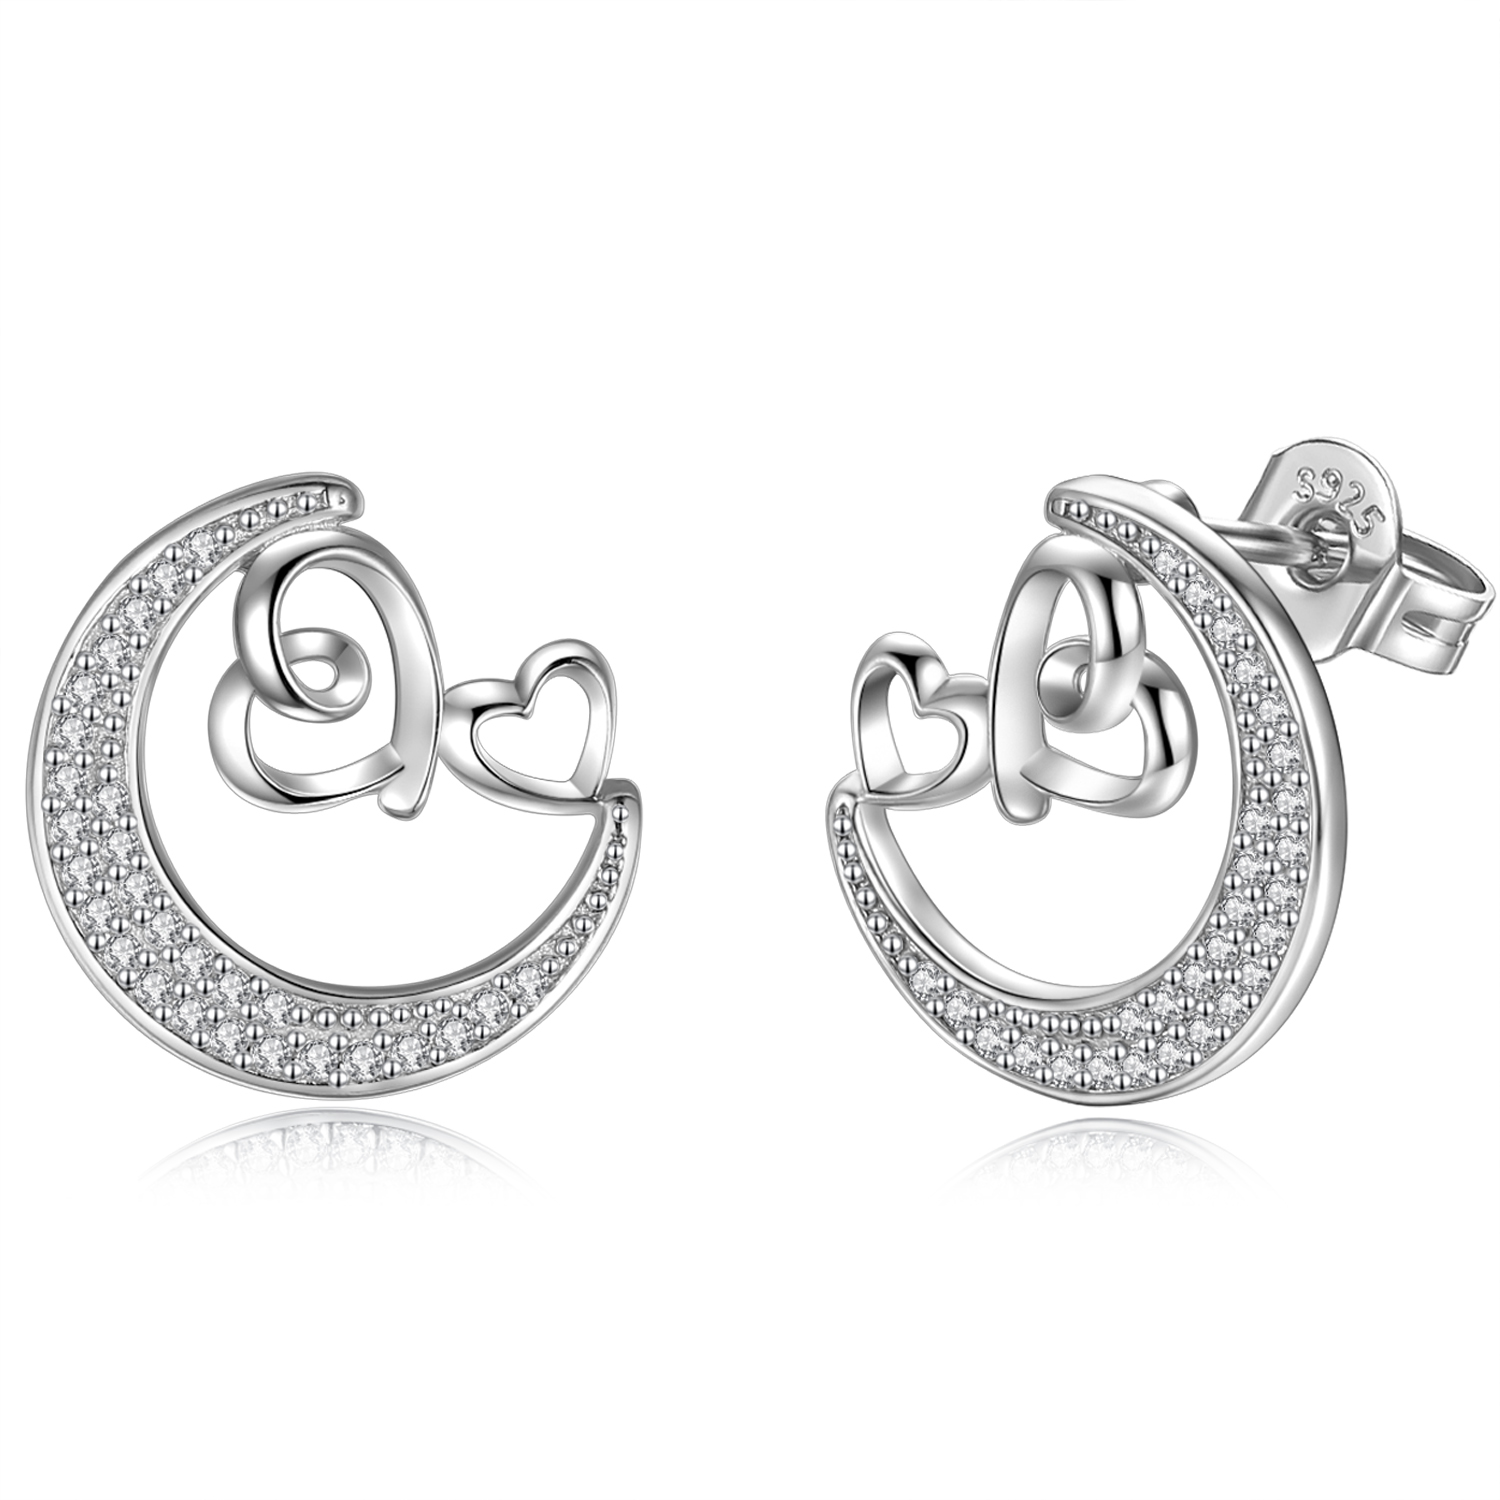 Merryshine Jewelry 925 Sterling Silver Rhodium Plated Add White CZ Diamond Half Moon Earring Vintage Heart Moon Stud Earrings